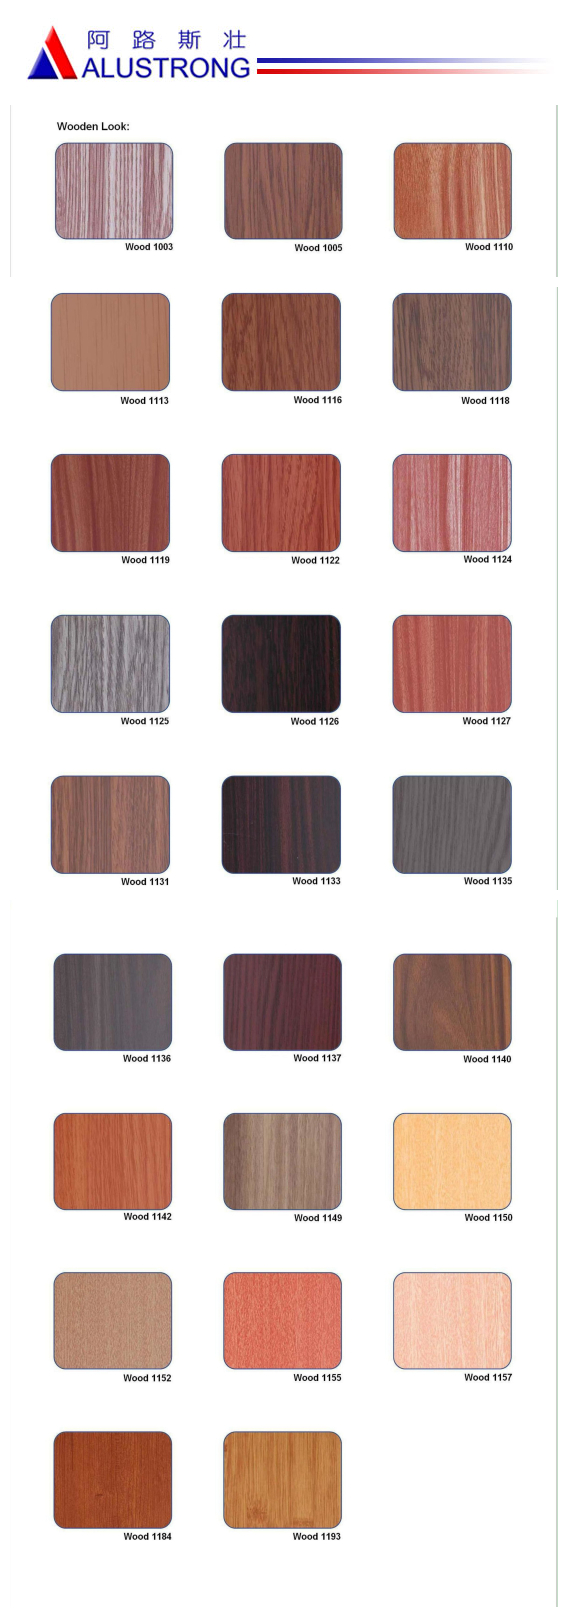 strongbond_wood_grain_aluminum_composite_panel_color